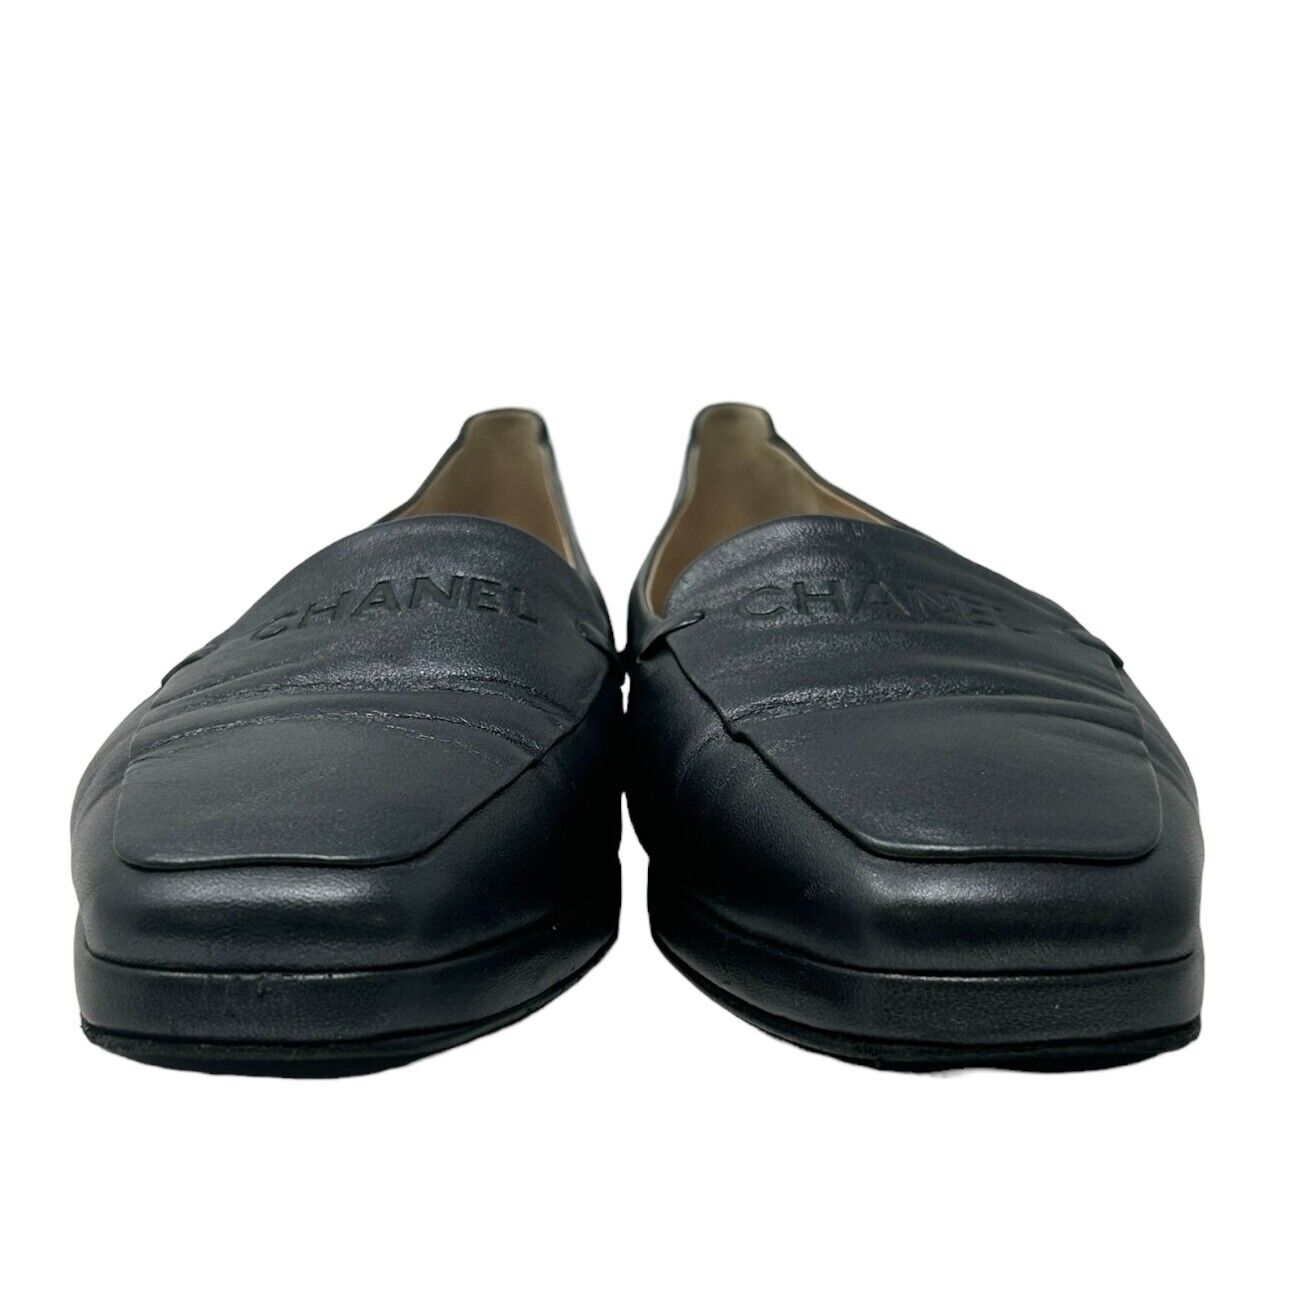 CHANEL Vintage Coco Mark Logo Pumps Loafer Flats #38 US 8 Black Leather RankAB